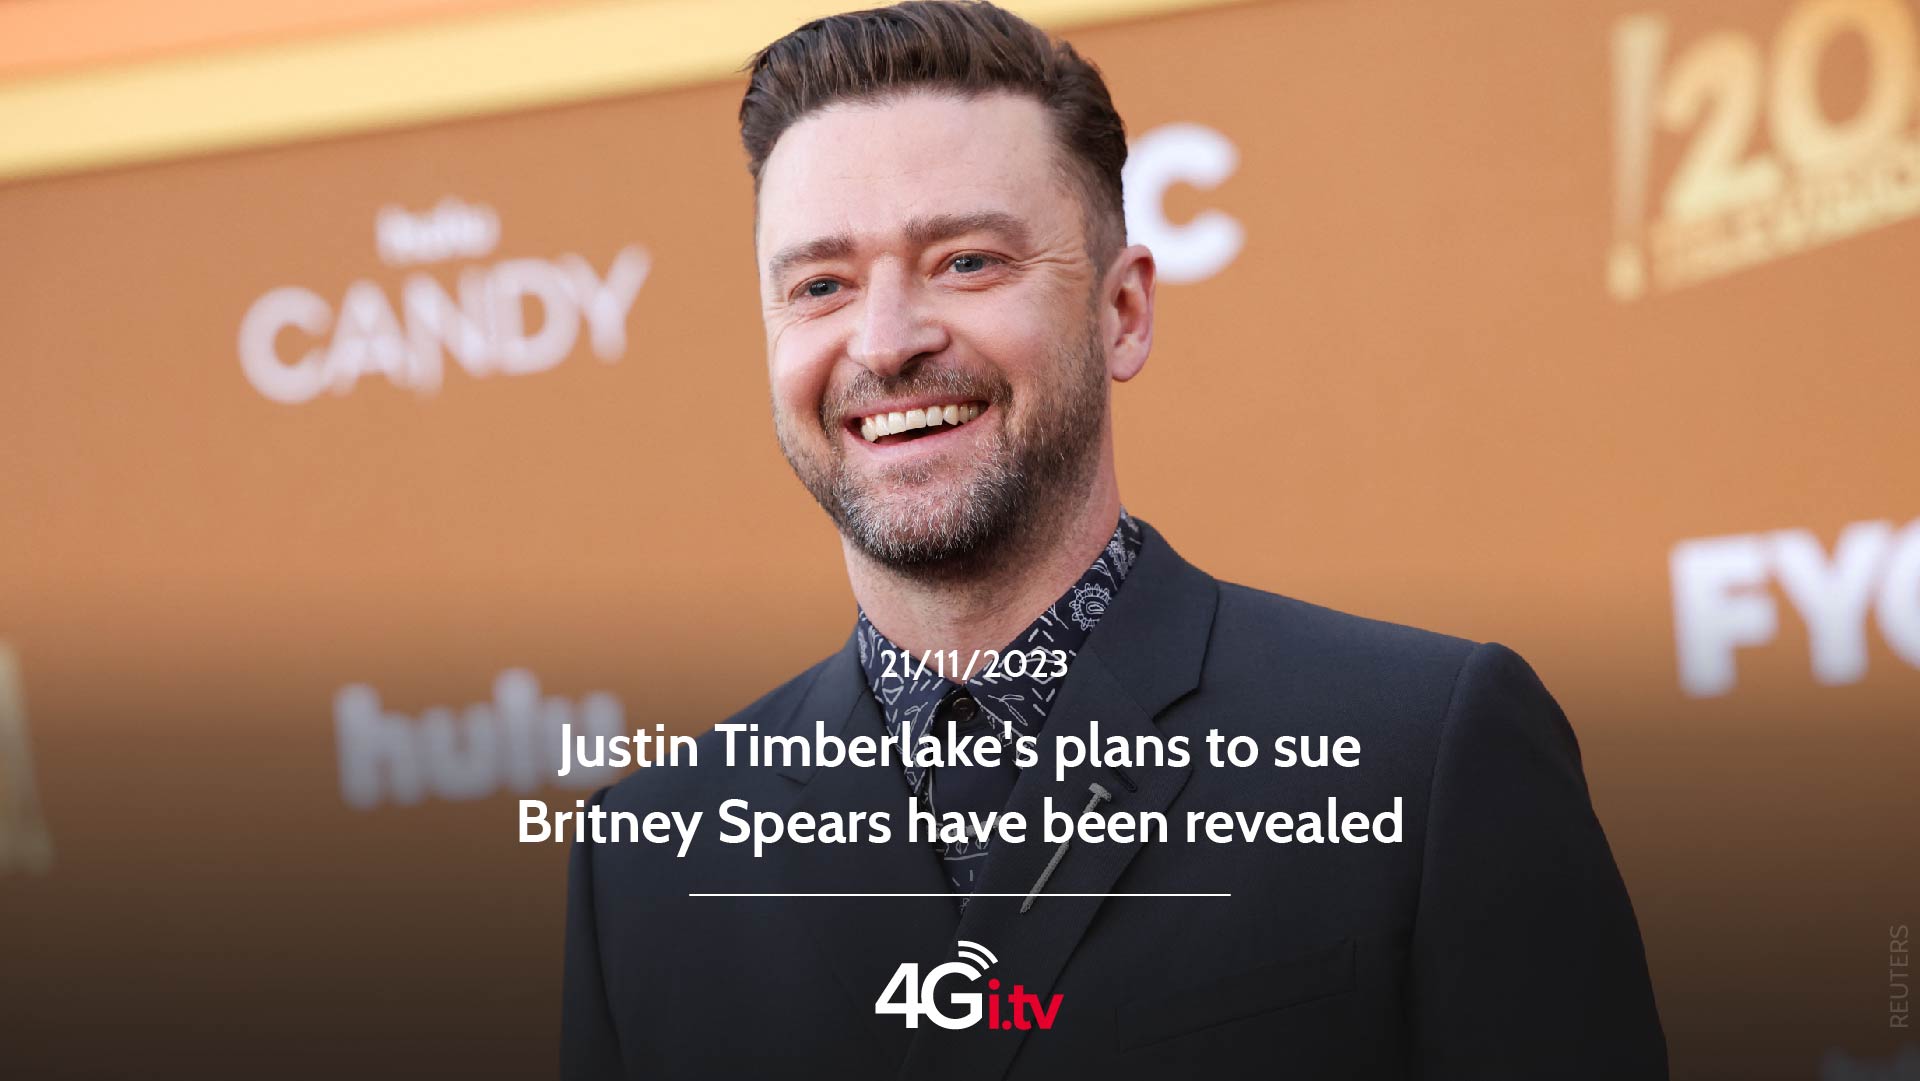 Подробнее о статье Justin Timberlake’s plans to sue Britney Spears have been revealed